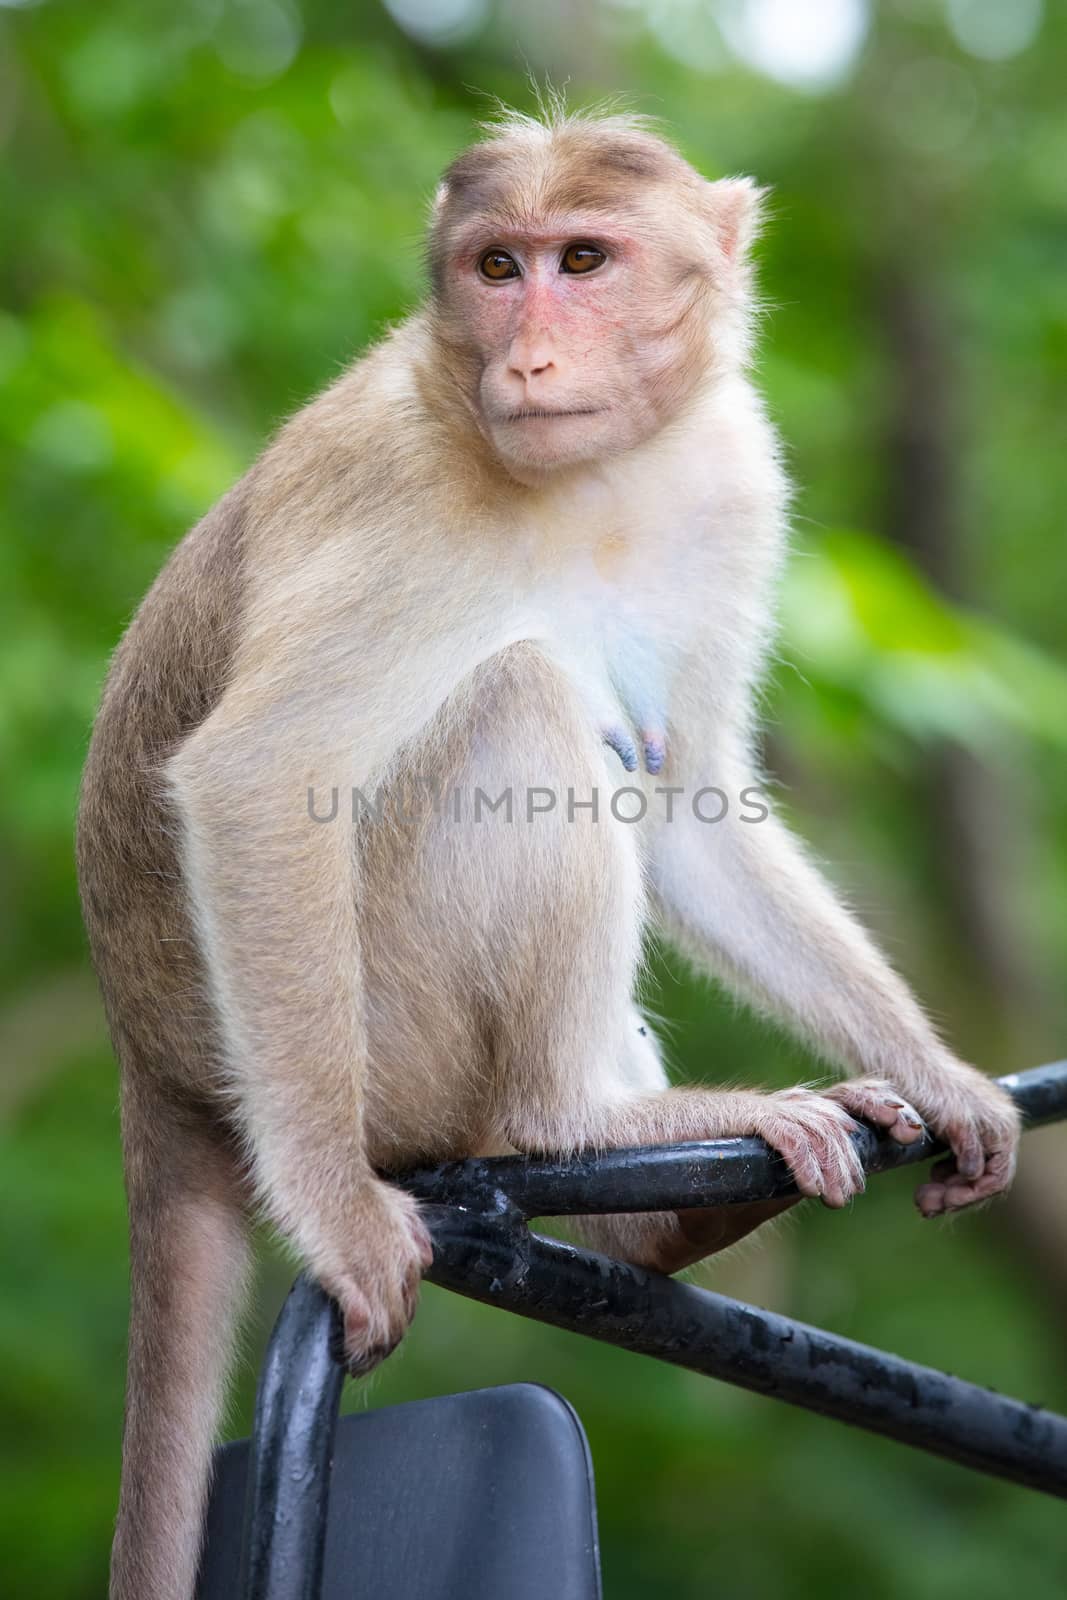 Monkeys at Kanheri Caves in Mumbai India by FiledIMAGE